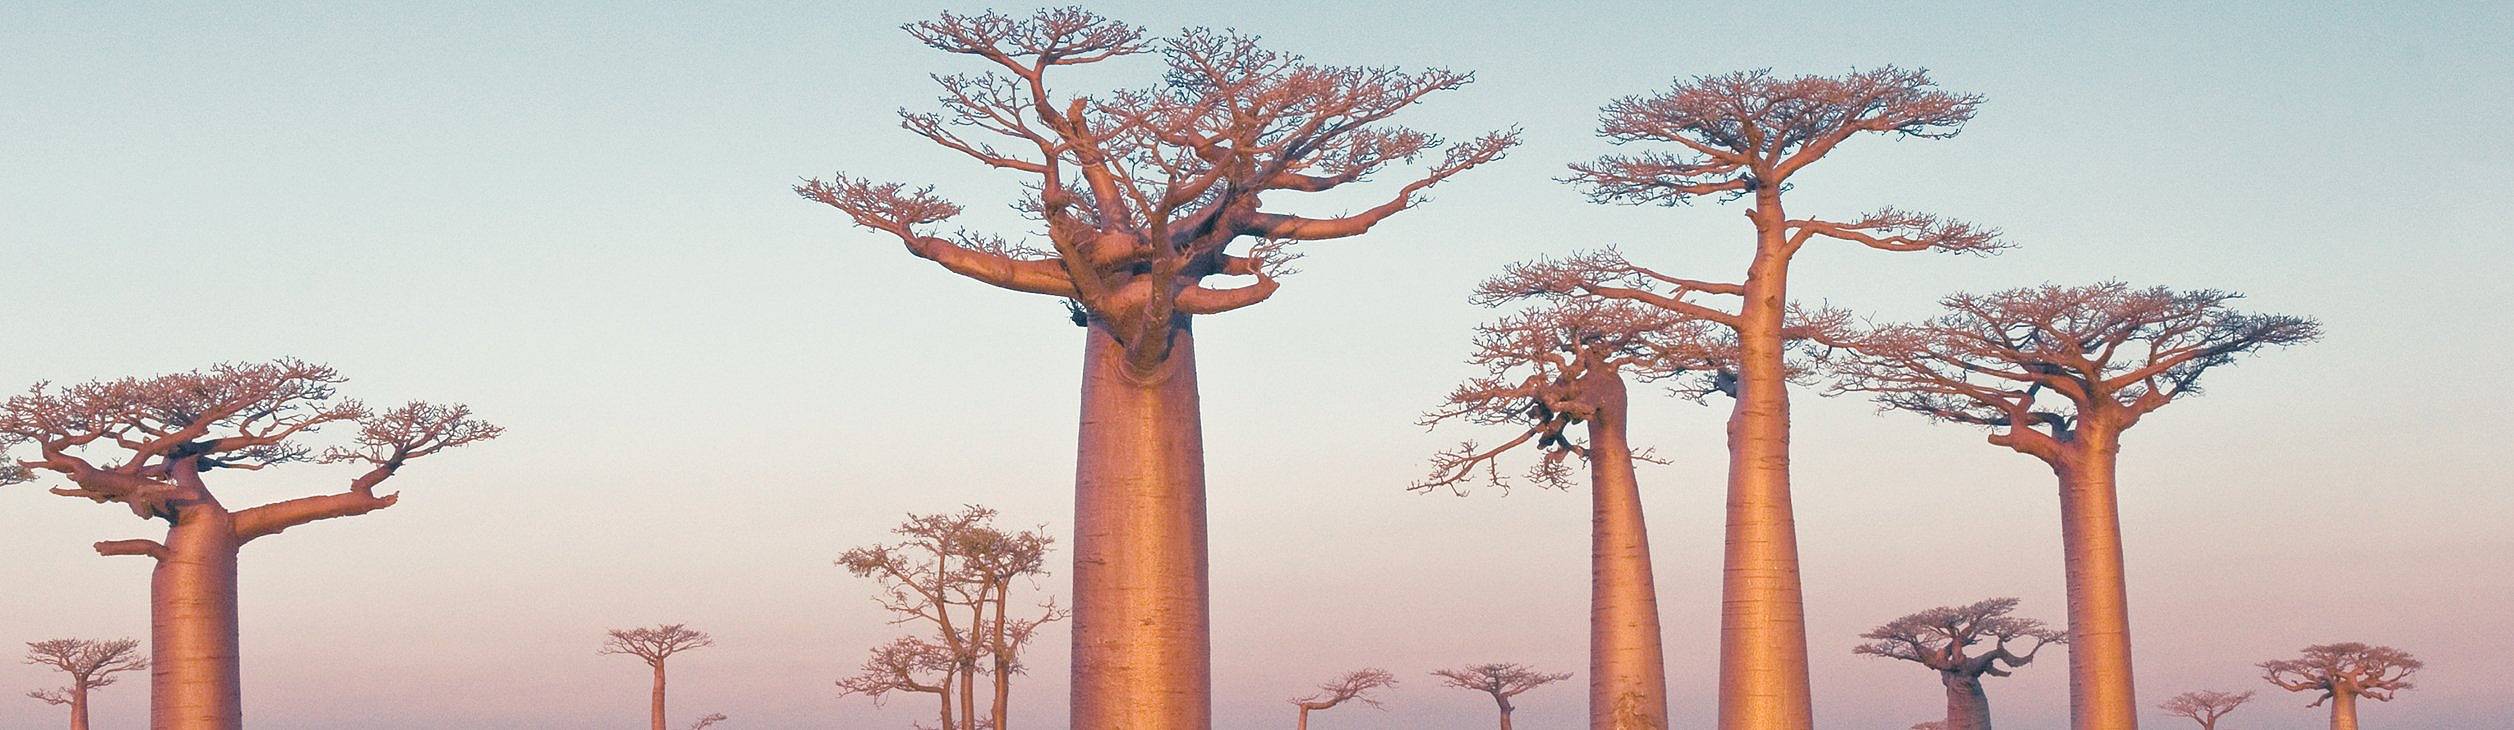 Otoño en Madagascar - Viajes en otoño 100% a medida